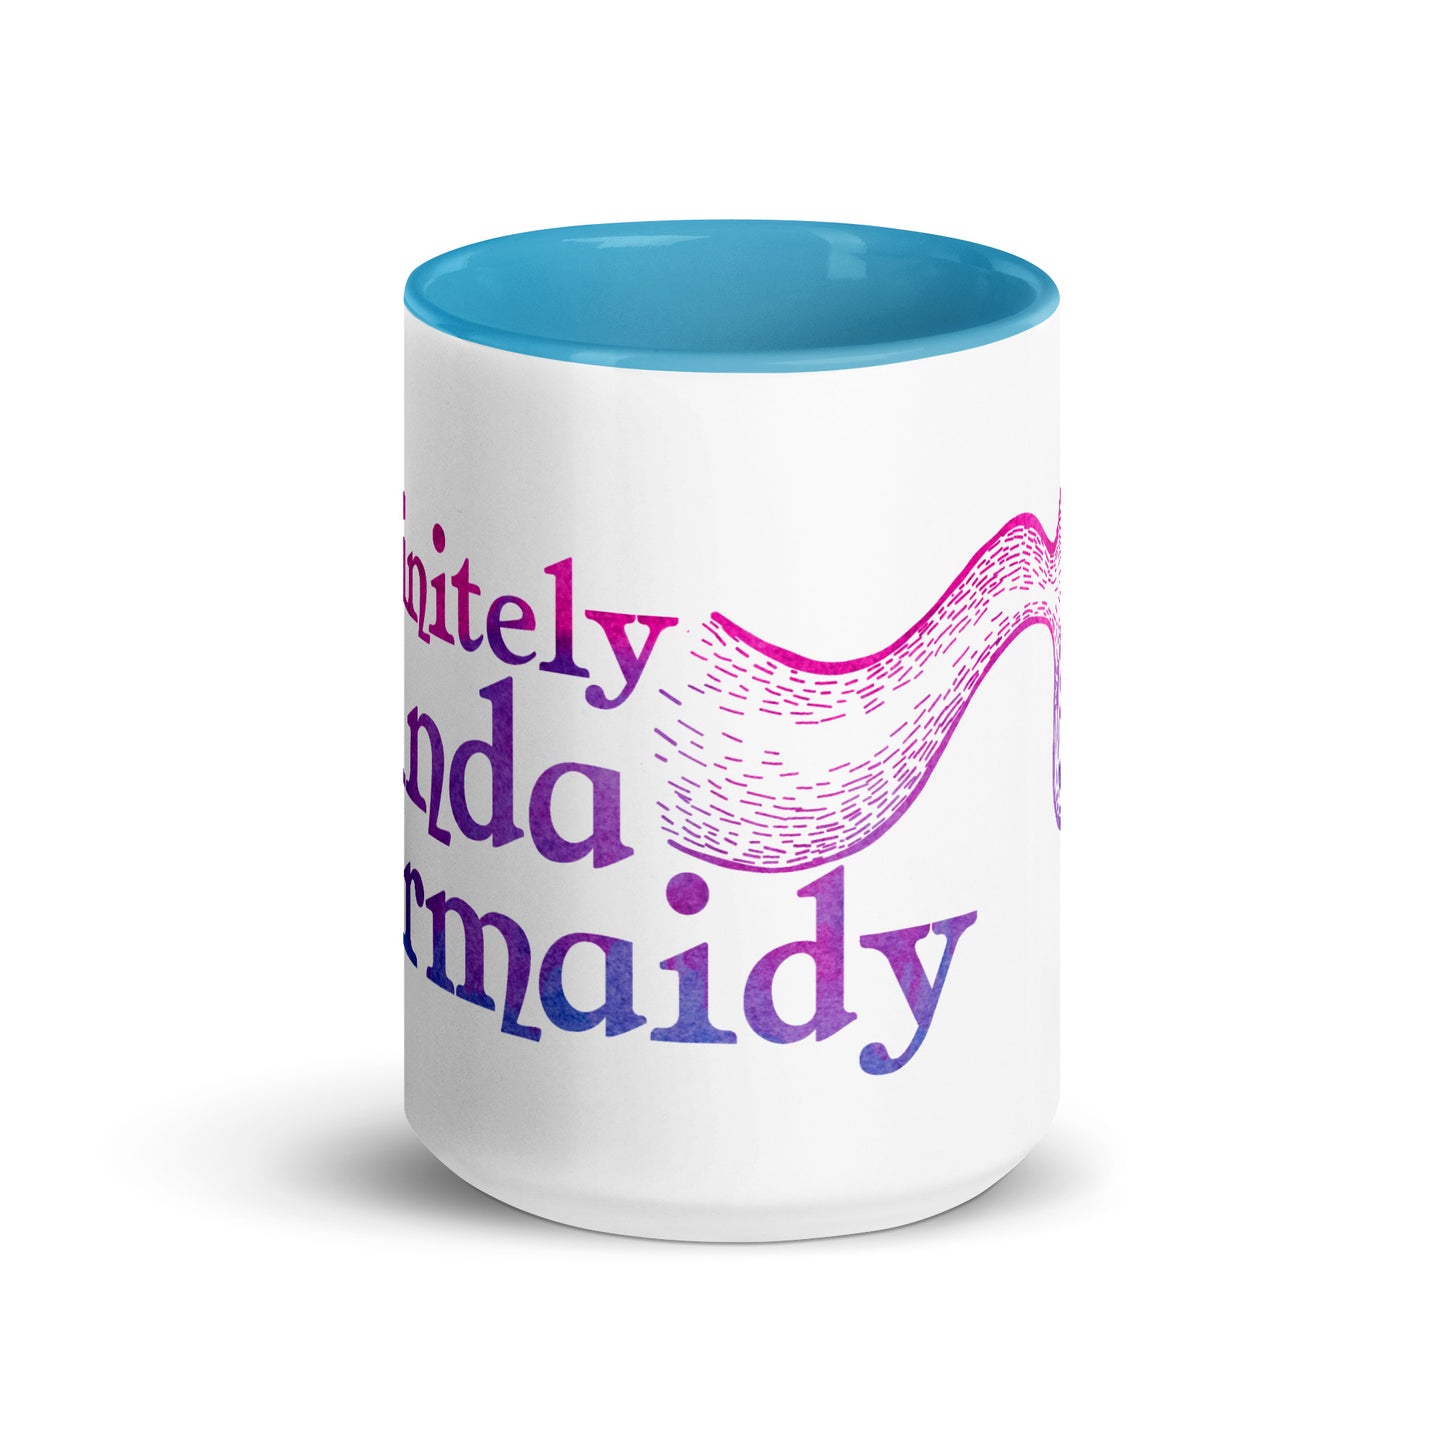 Definitely Kinda Mermaidy Mugs